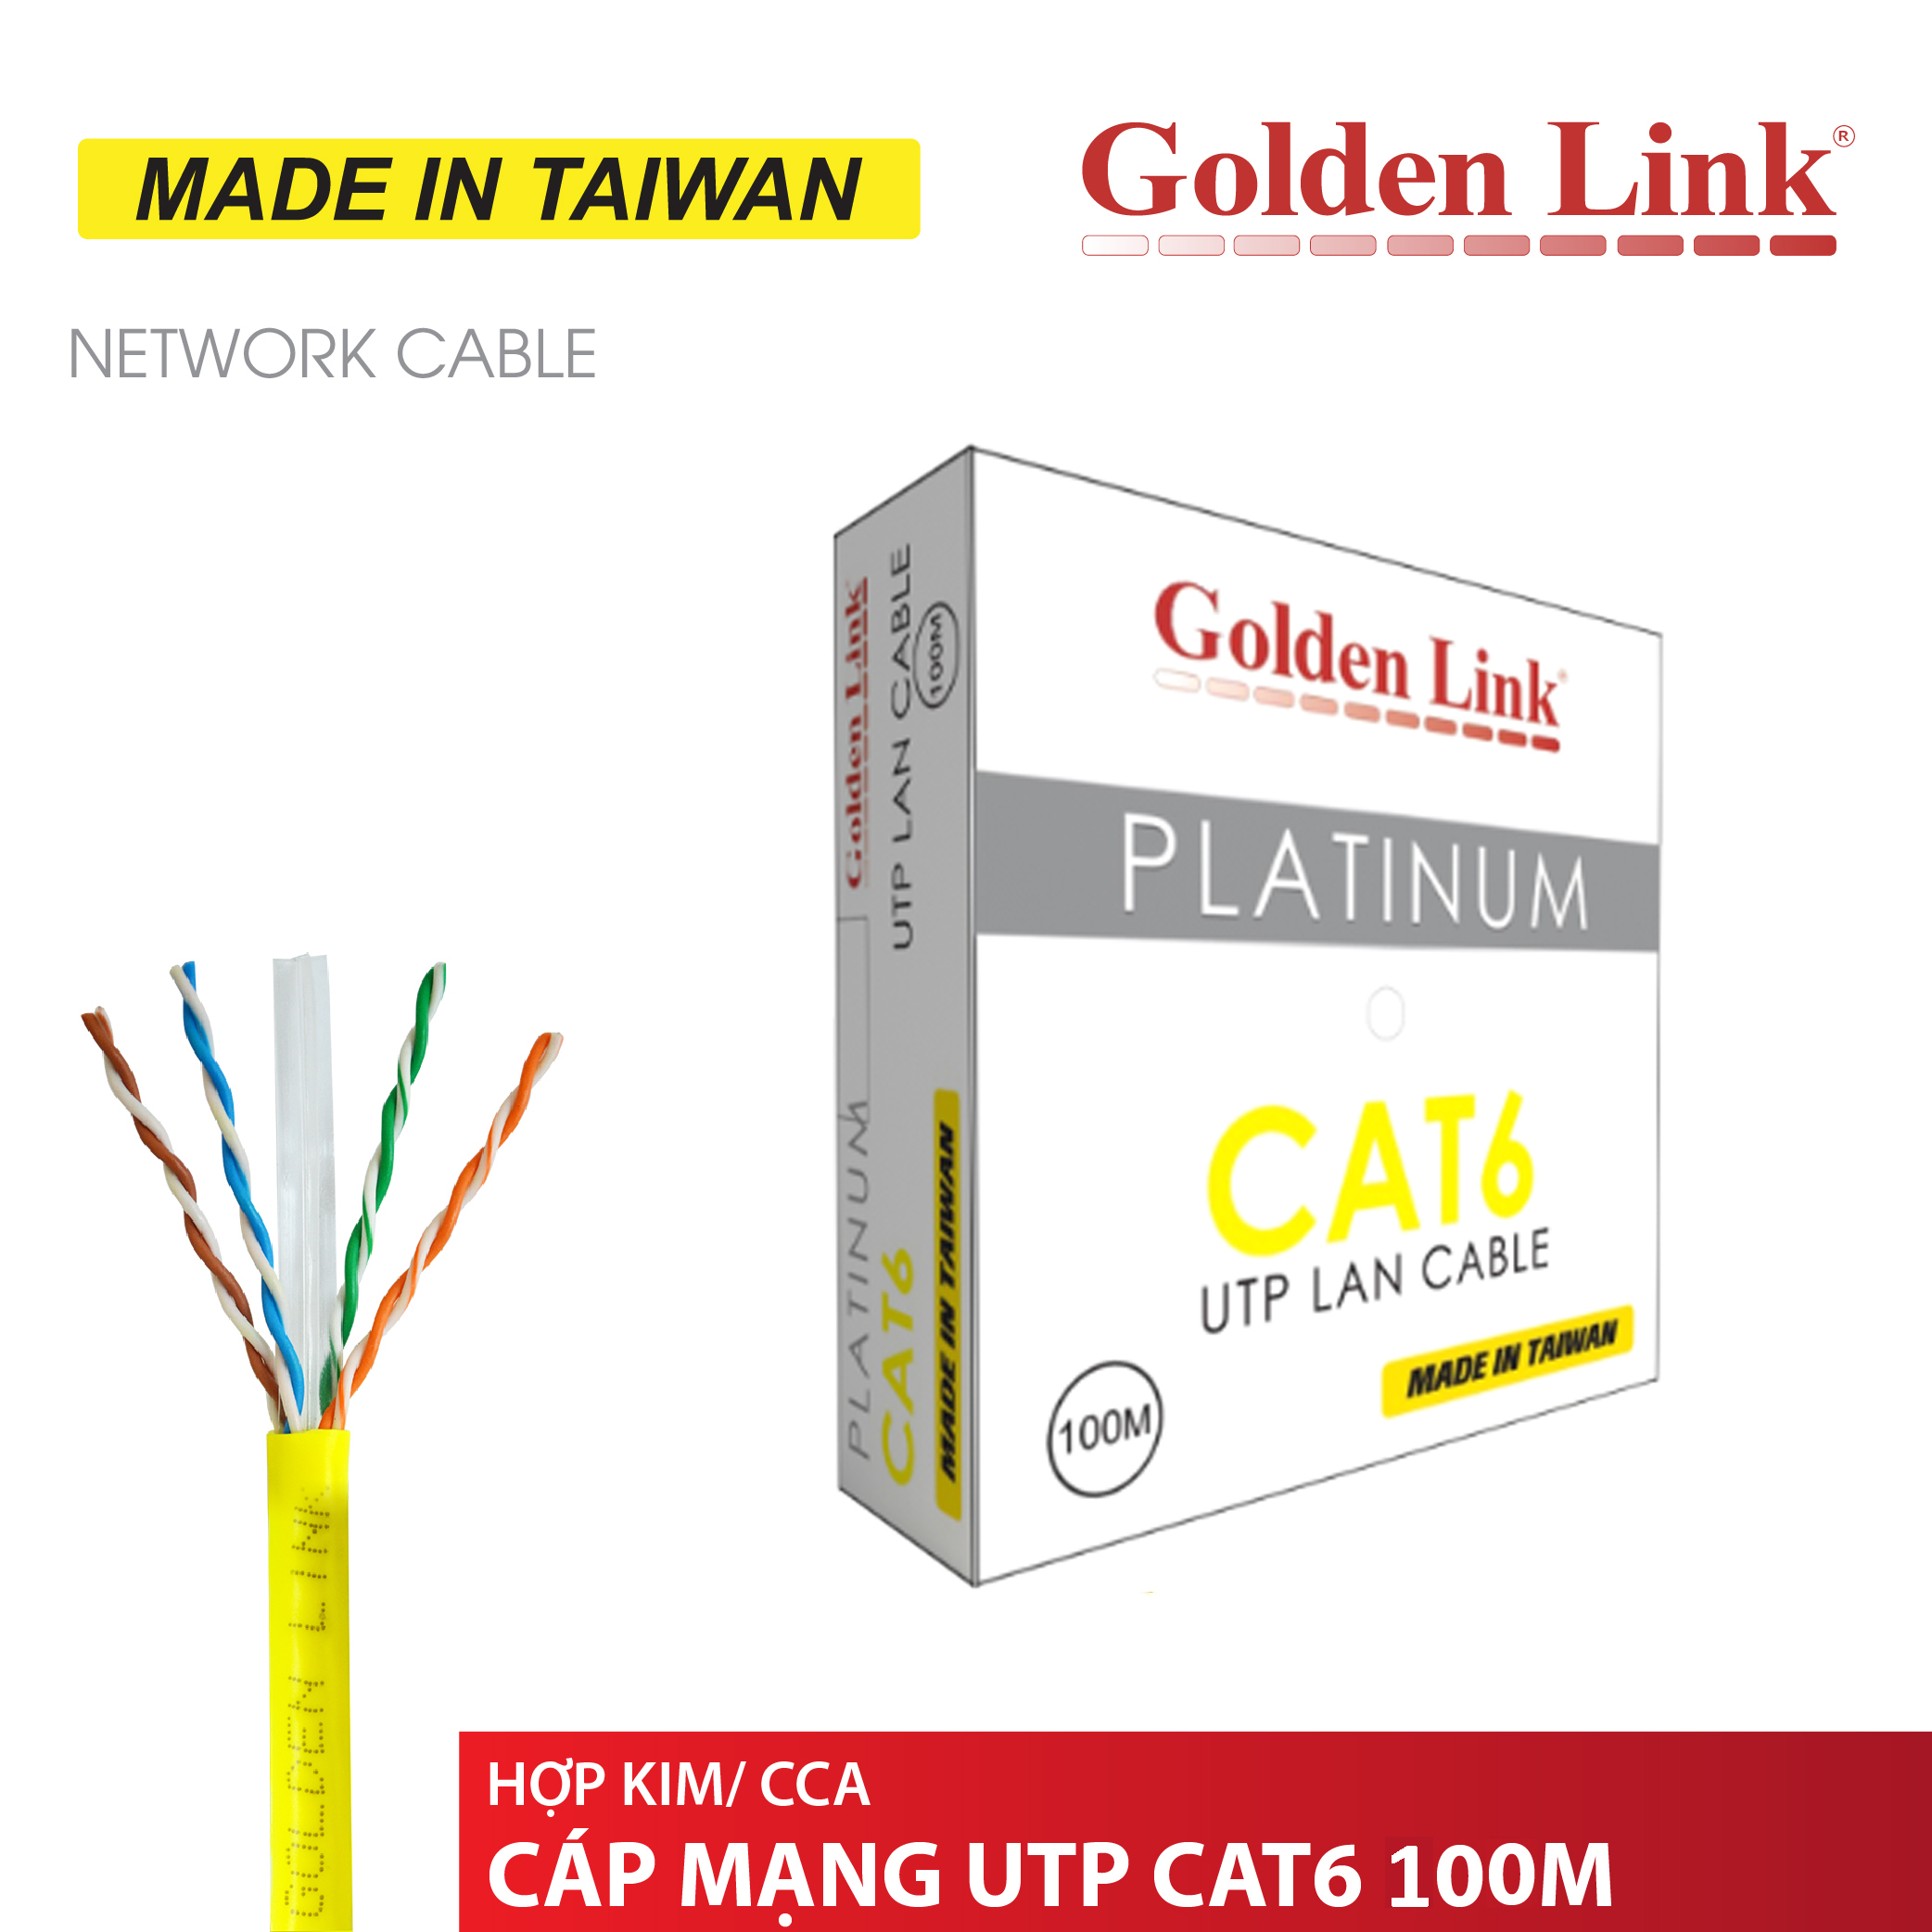 CÁP MẠNG GOLDEN LINK PLATINUM UTP CAT 6 MADE IN TAIWAN - 100M